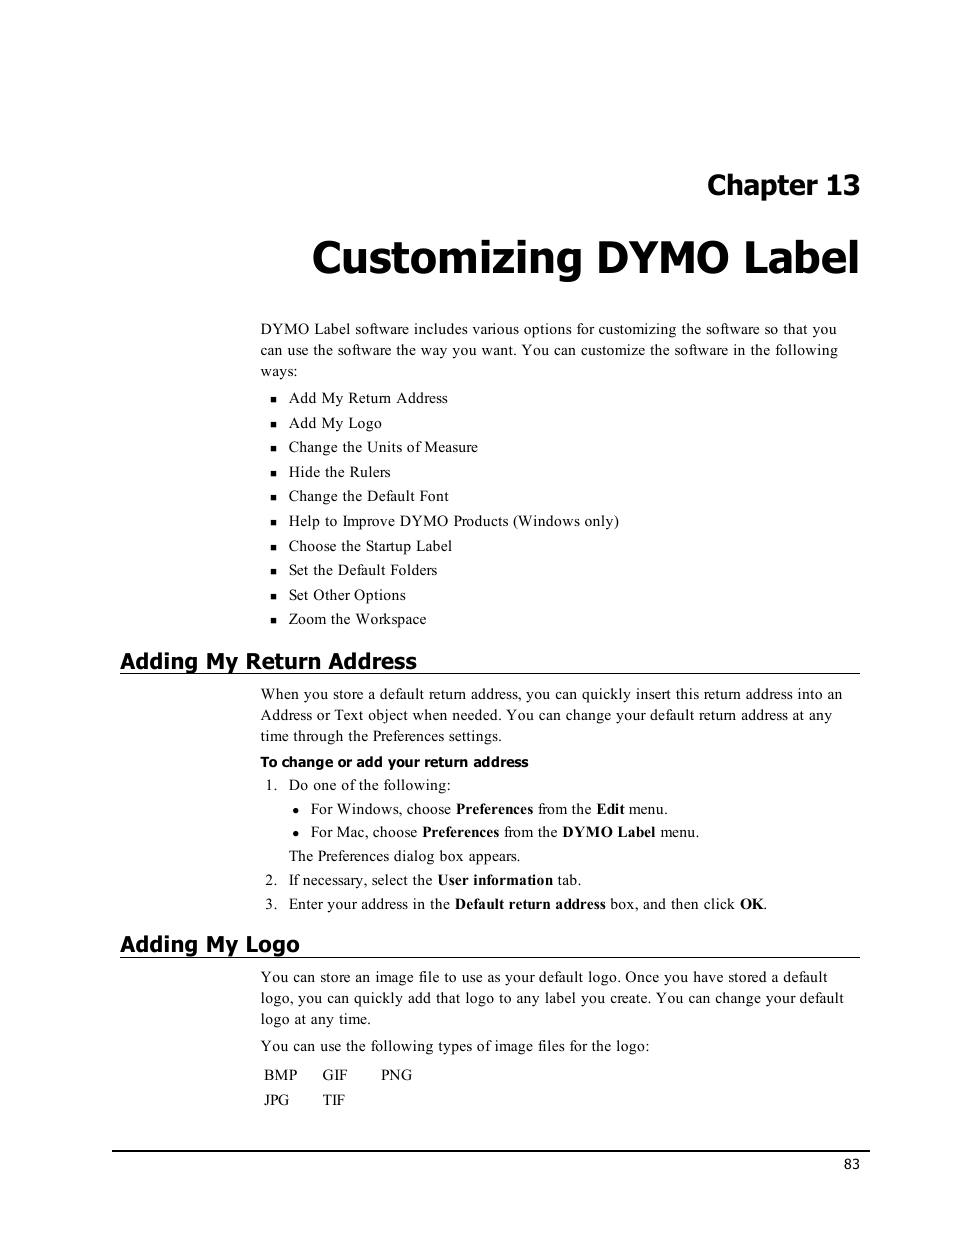 DYMO Logo - Customizing dymo label, Adding my return address, Adding my logo ...